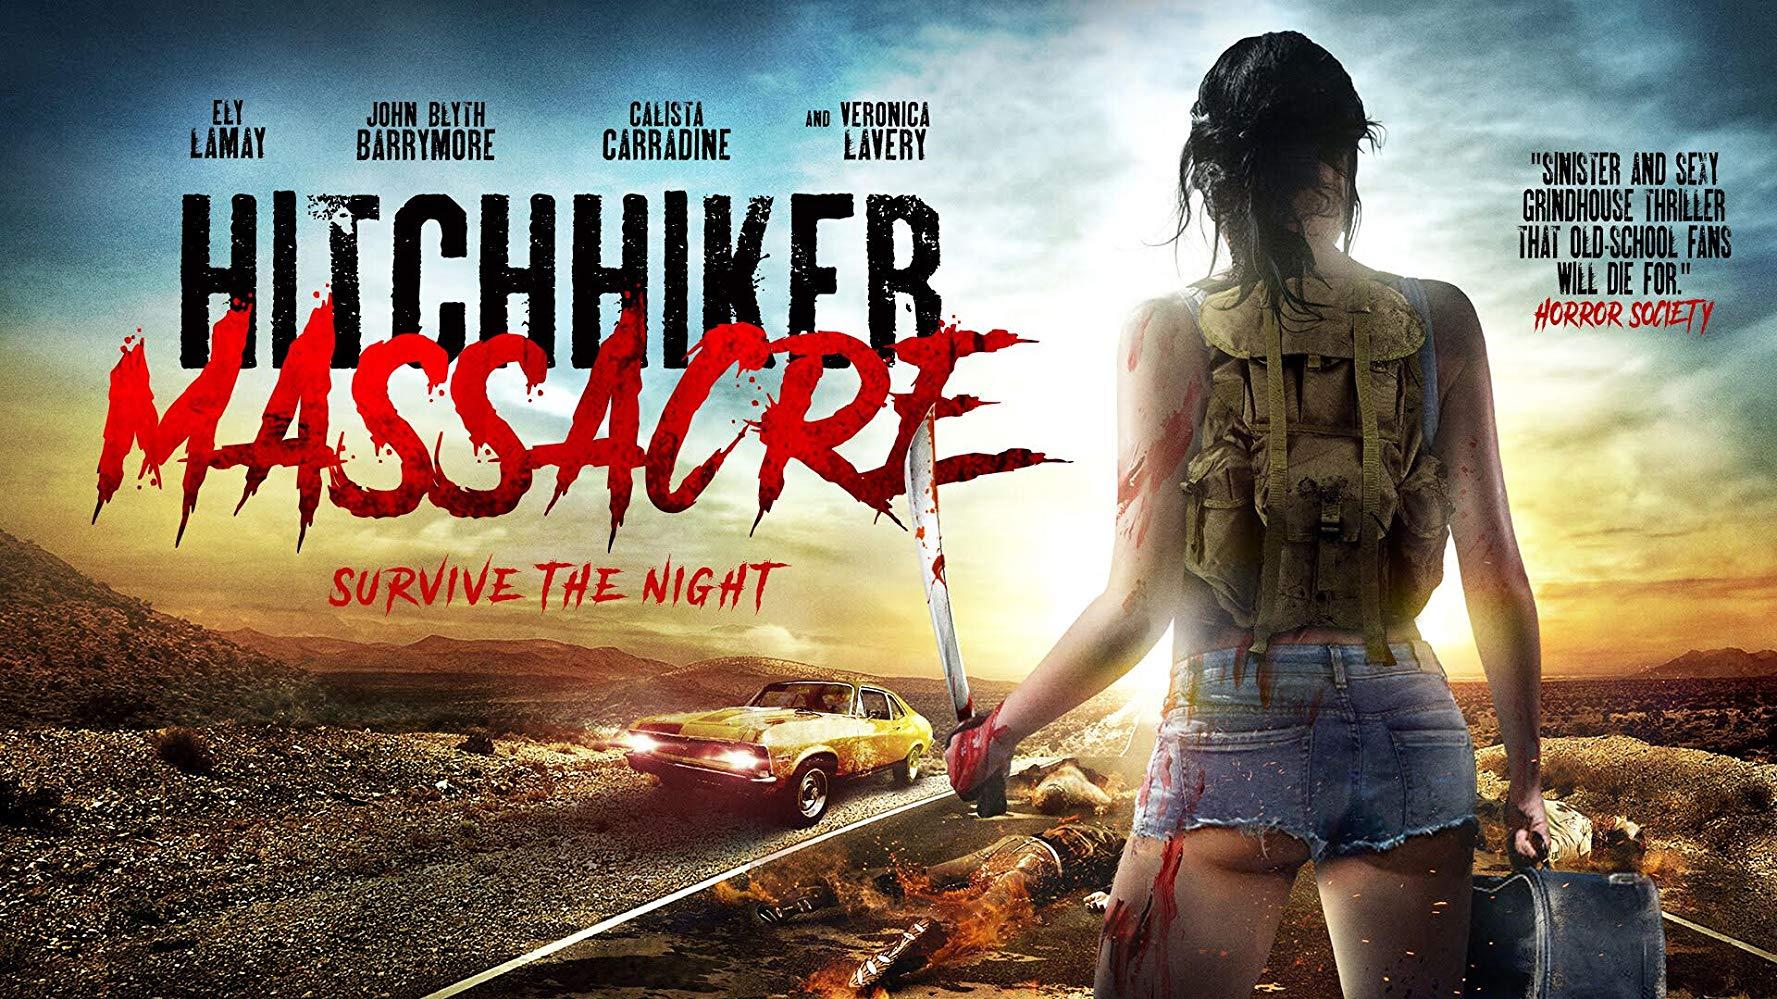 مشاهدة فيلم Hitchhiker Massacre (2017) مترجم HD اون لاين